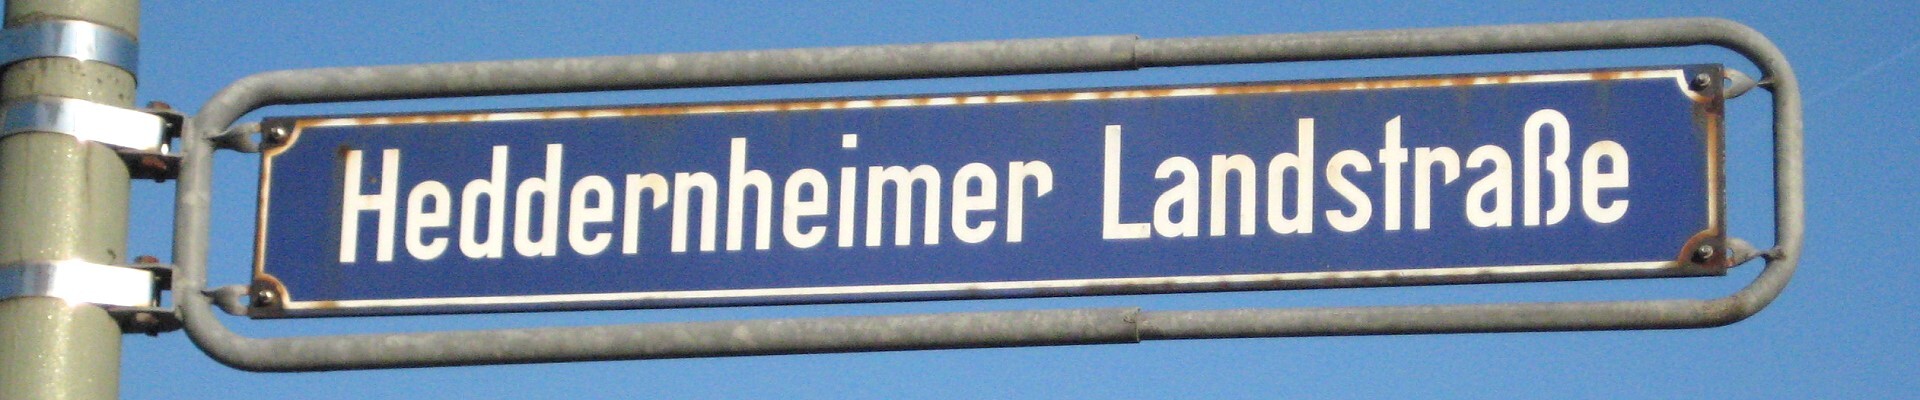 U-Bahnhof Heddernheimer Landstraße